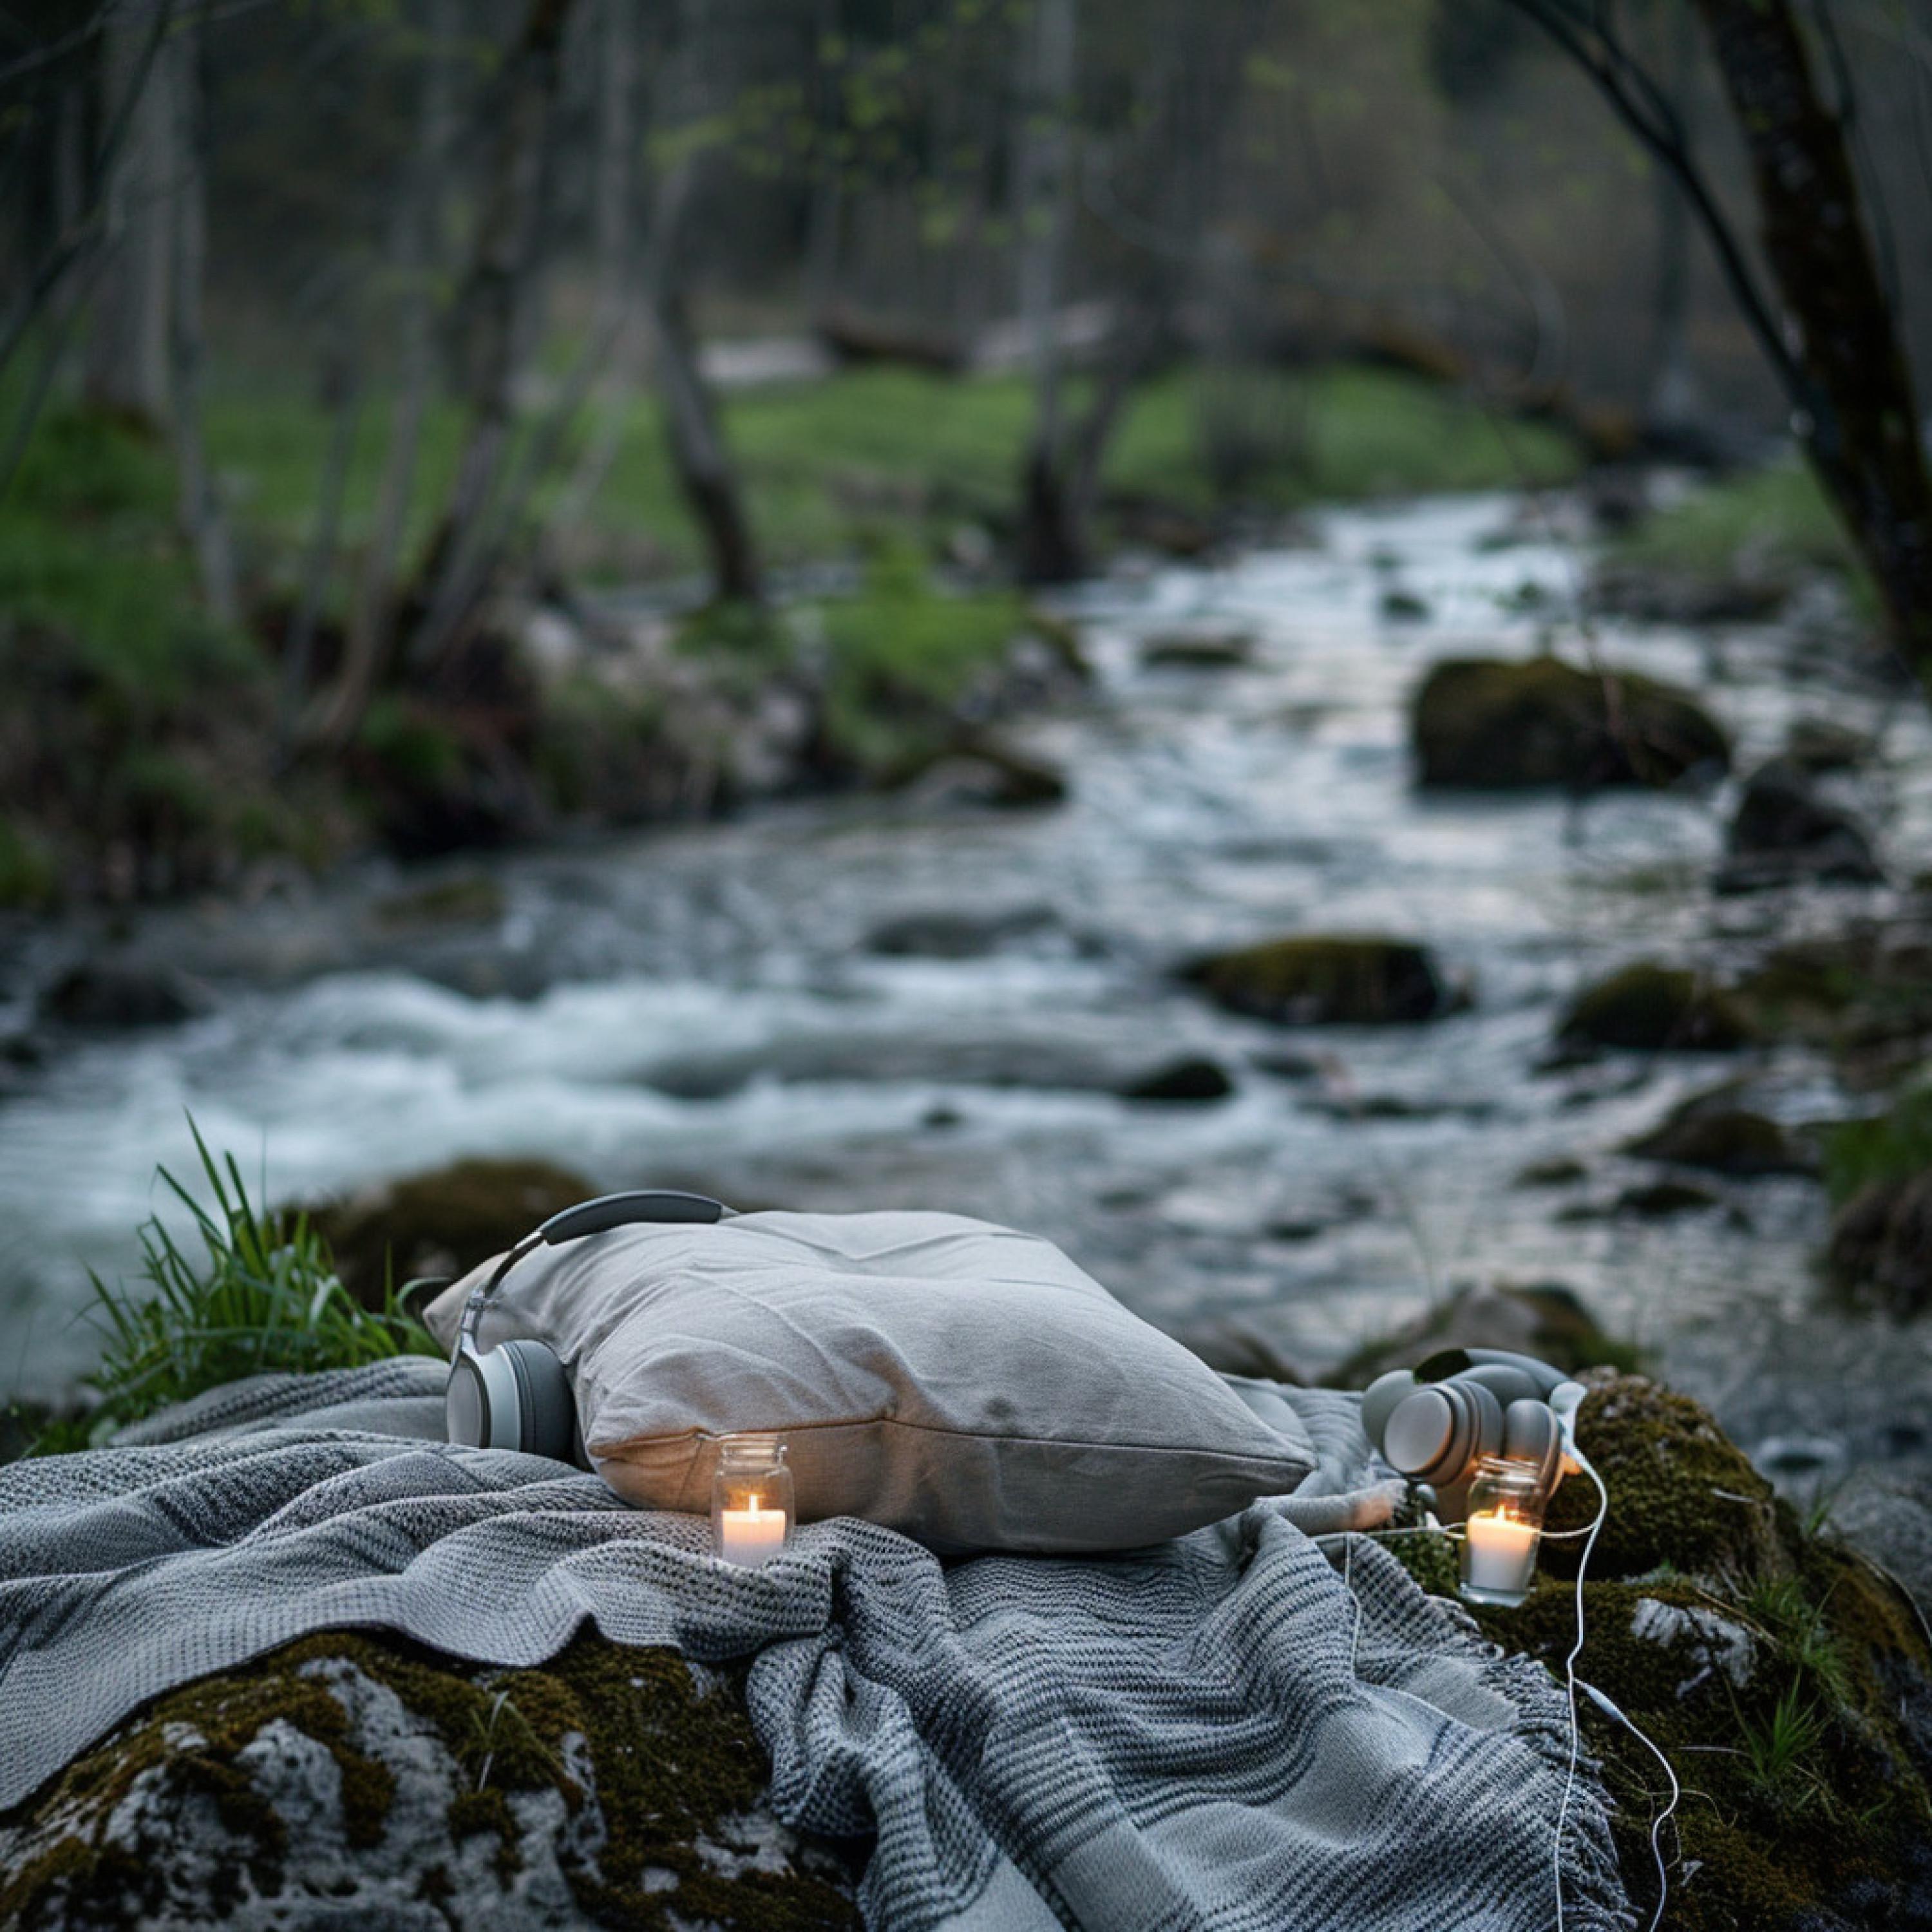 Oliver Sleeping - Nightfall's Gentle Waters